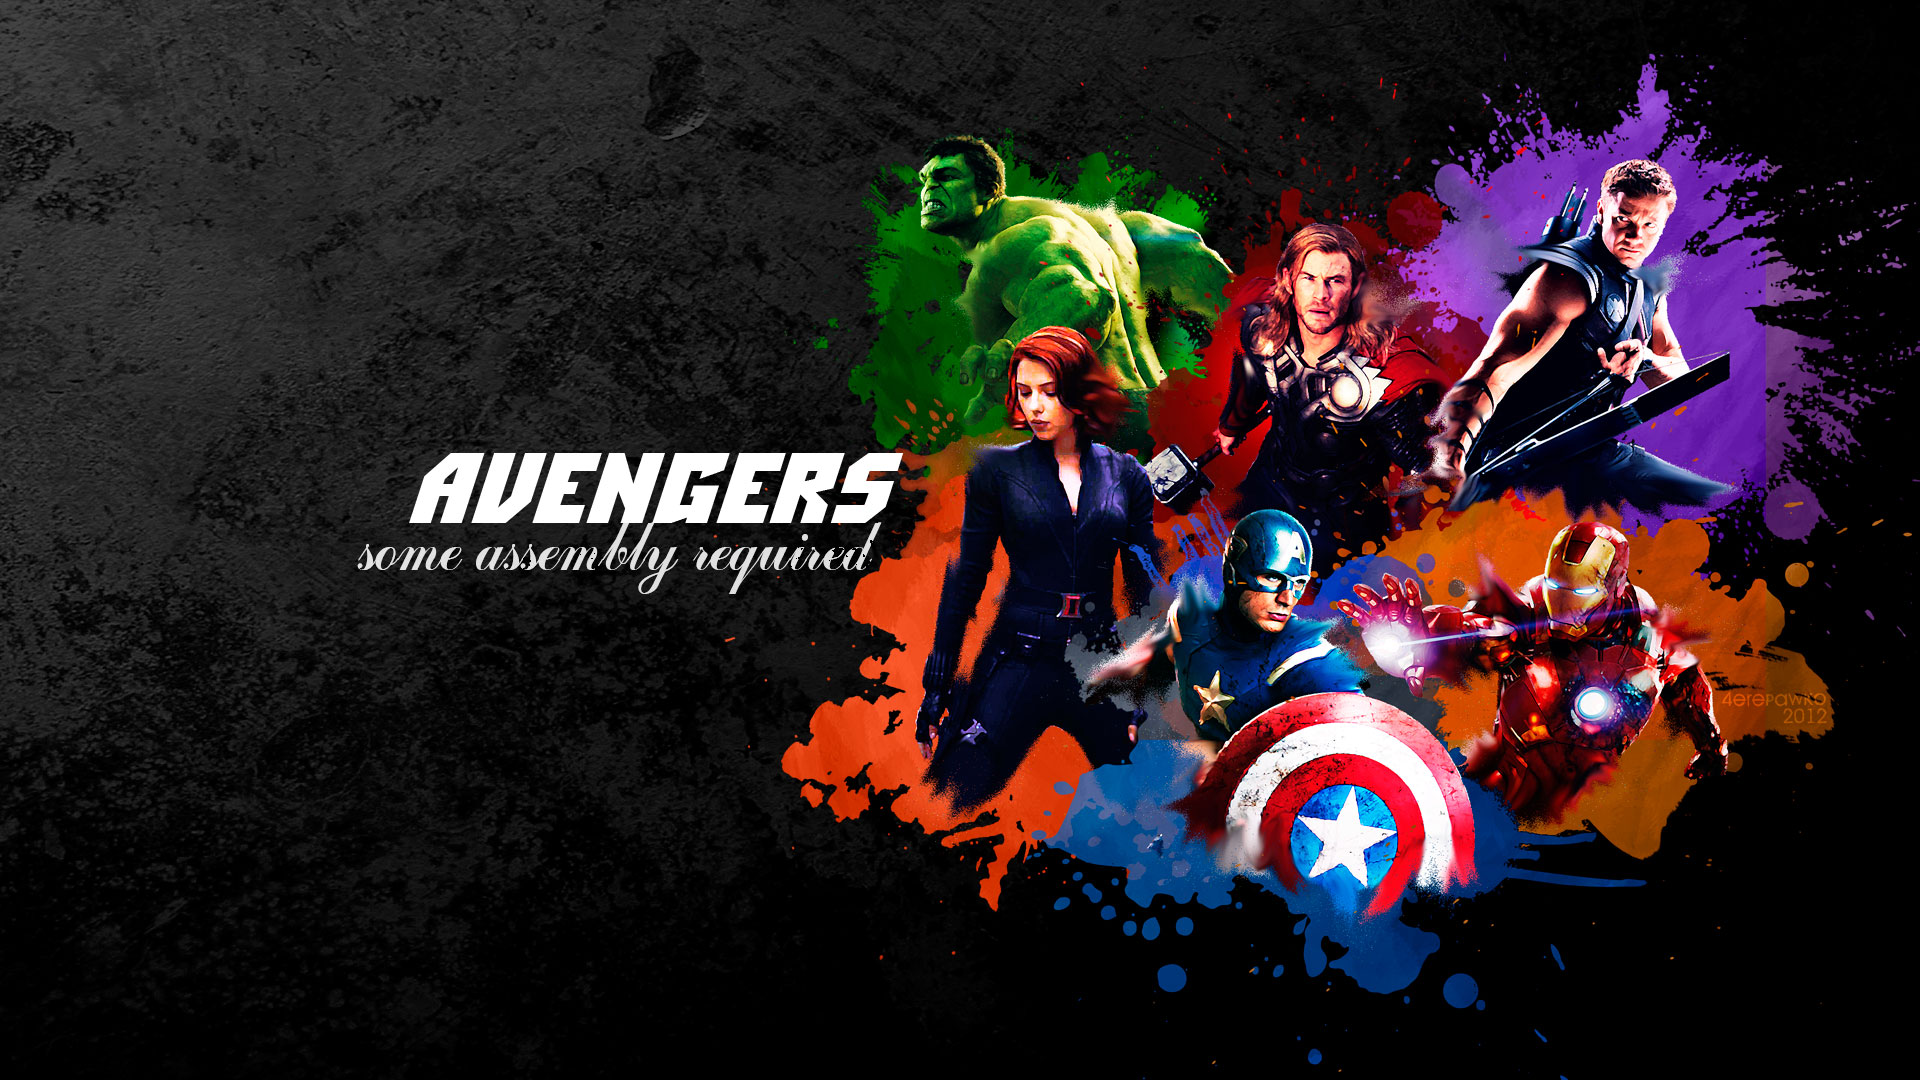 I Vendicatori Immagini The Avengers HD Wallpaper And Background